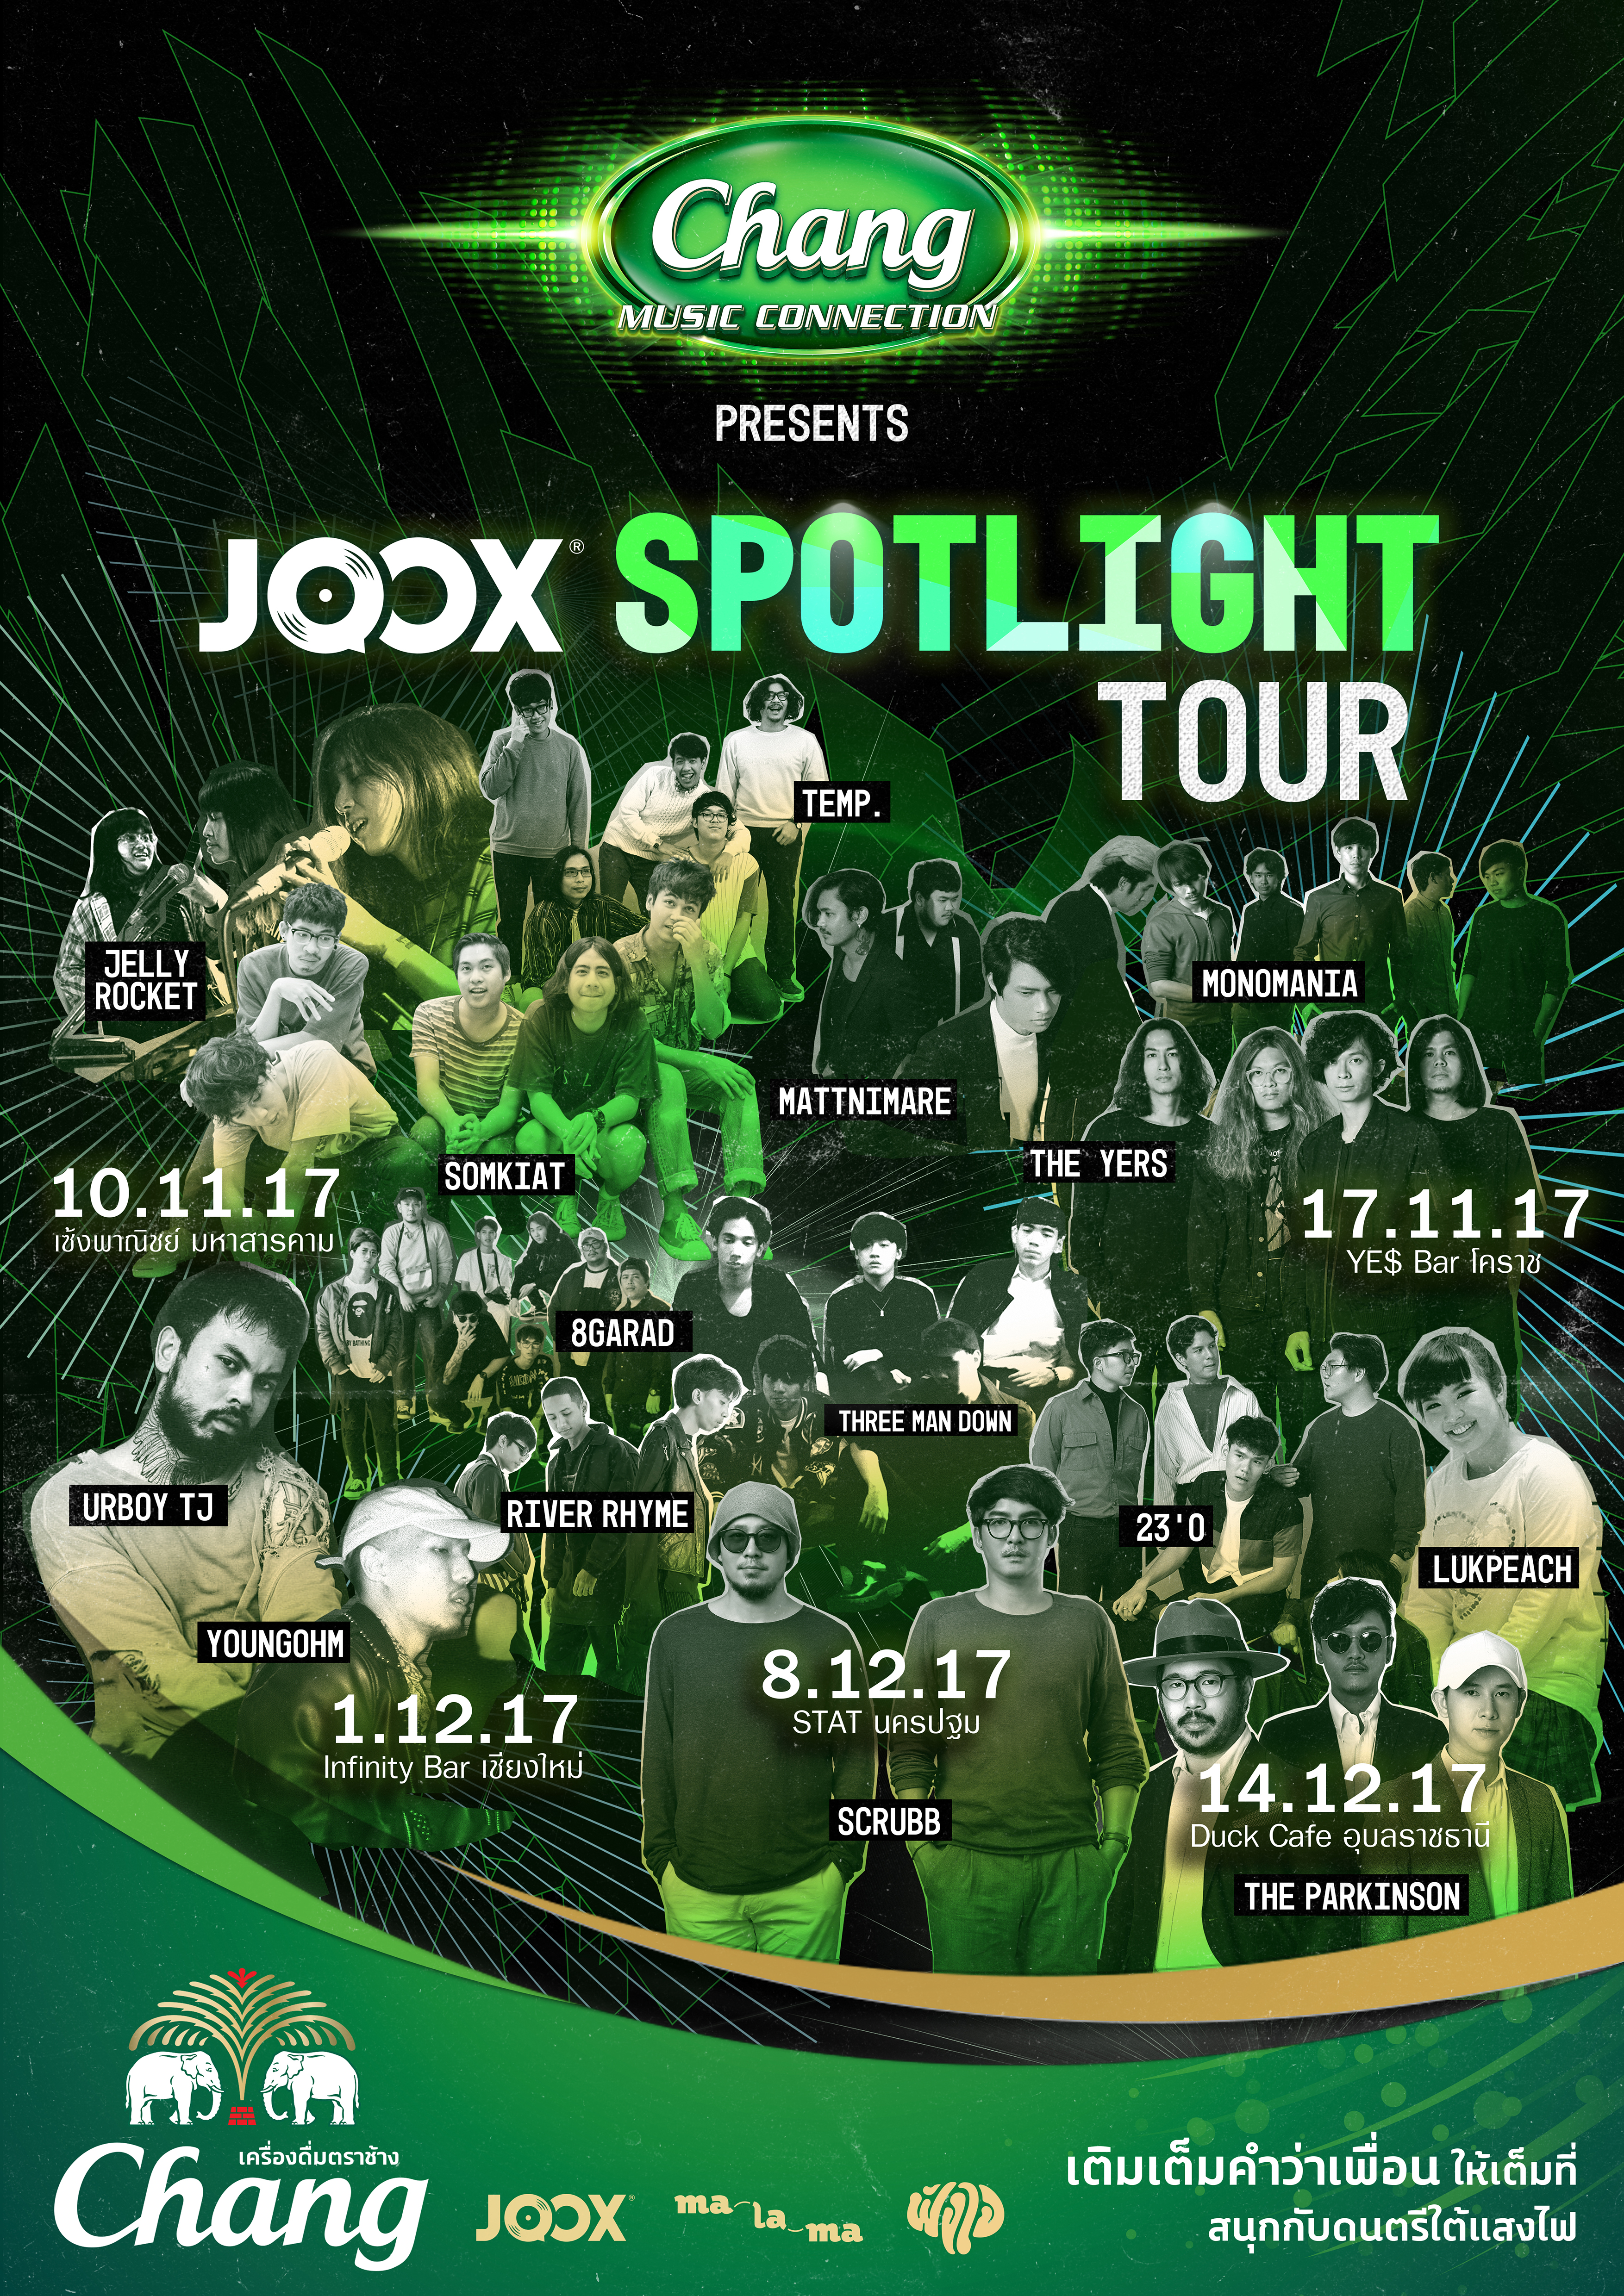 Chang Music Connection Presents JOOX Spotlight Tour บุกเติมเต็มคำว่าเพื่อน 5 จังหวัดทั่วประเทศ